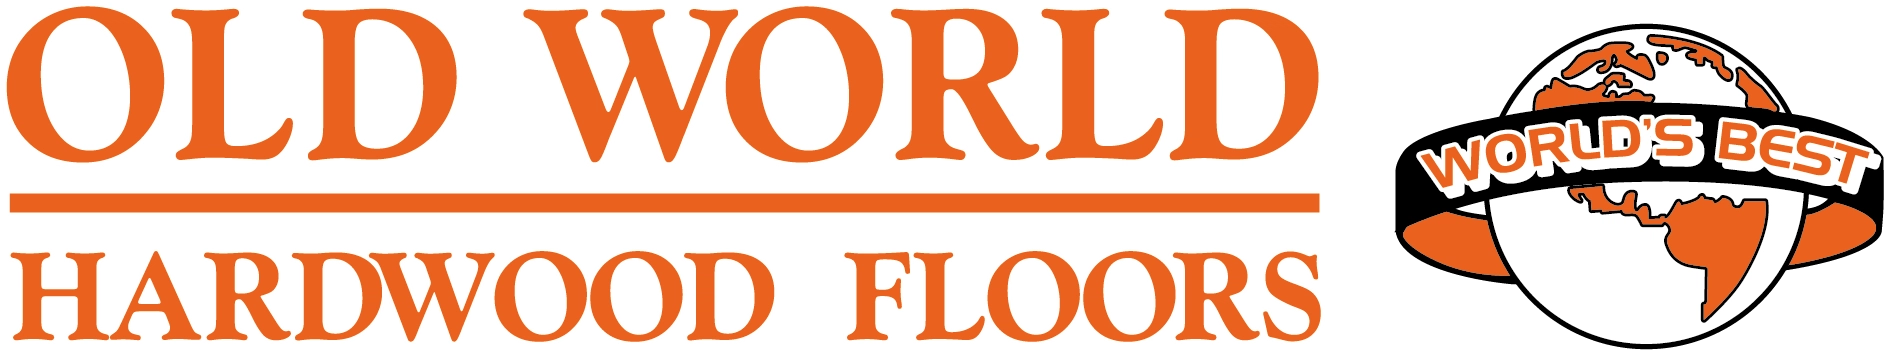 Old World Hardwood Floors Logo